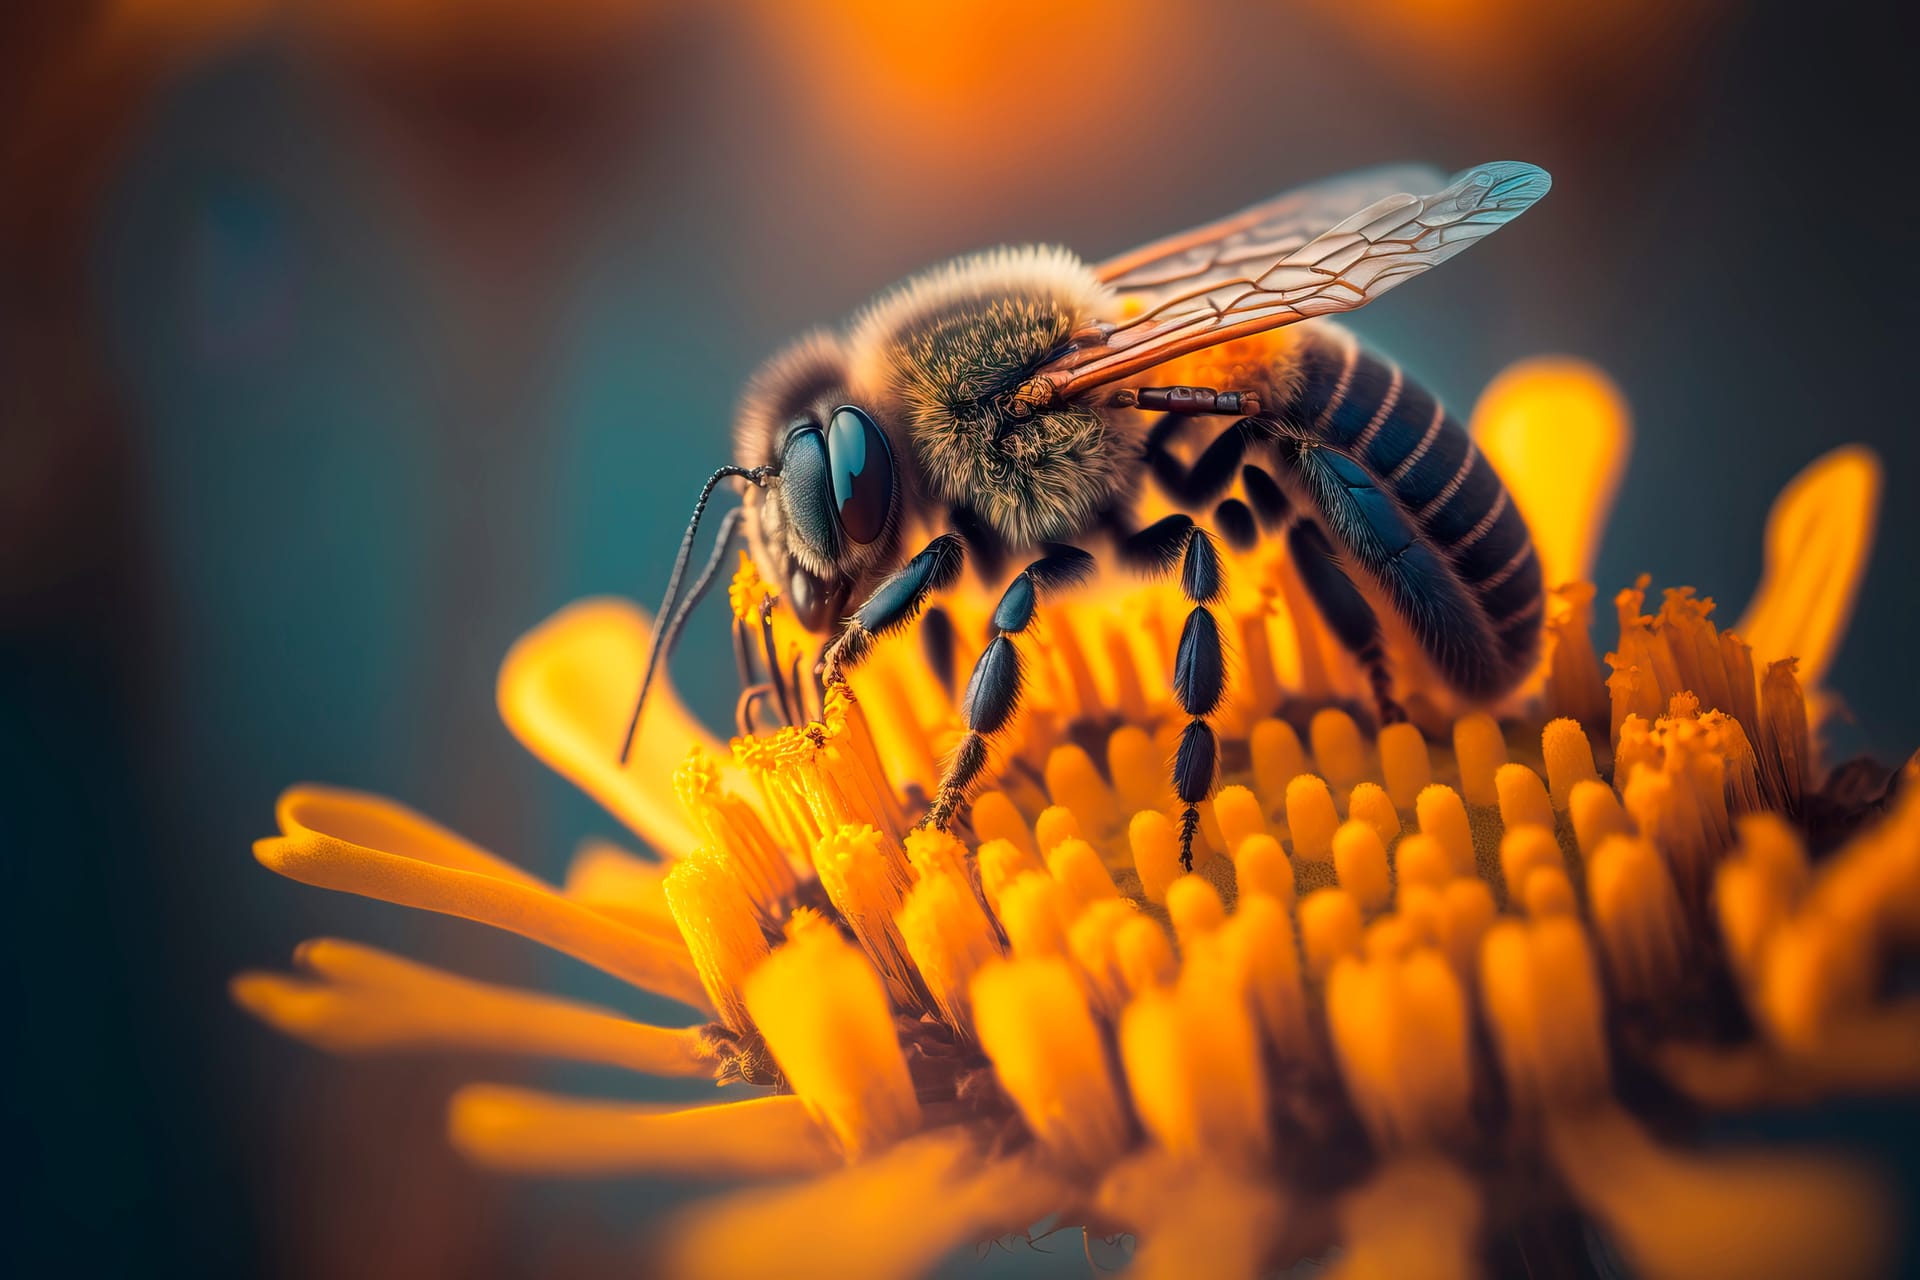 Honey bee collecting pollen yellow flower image